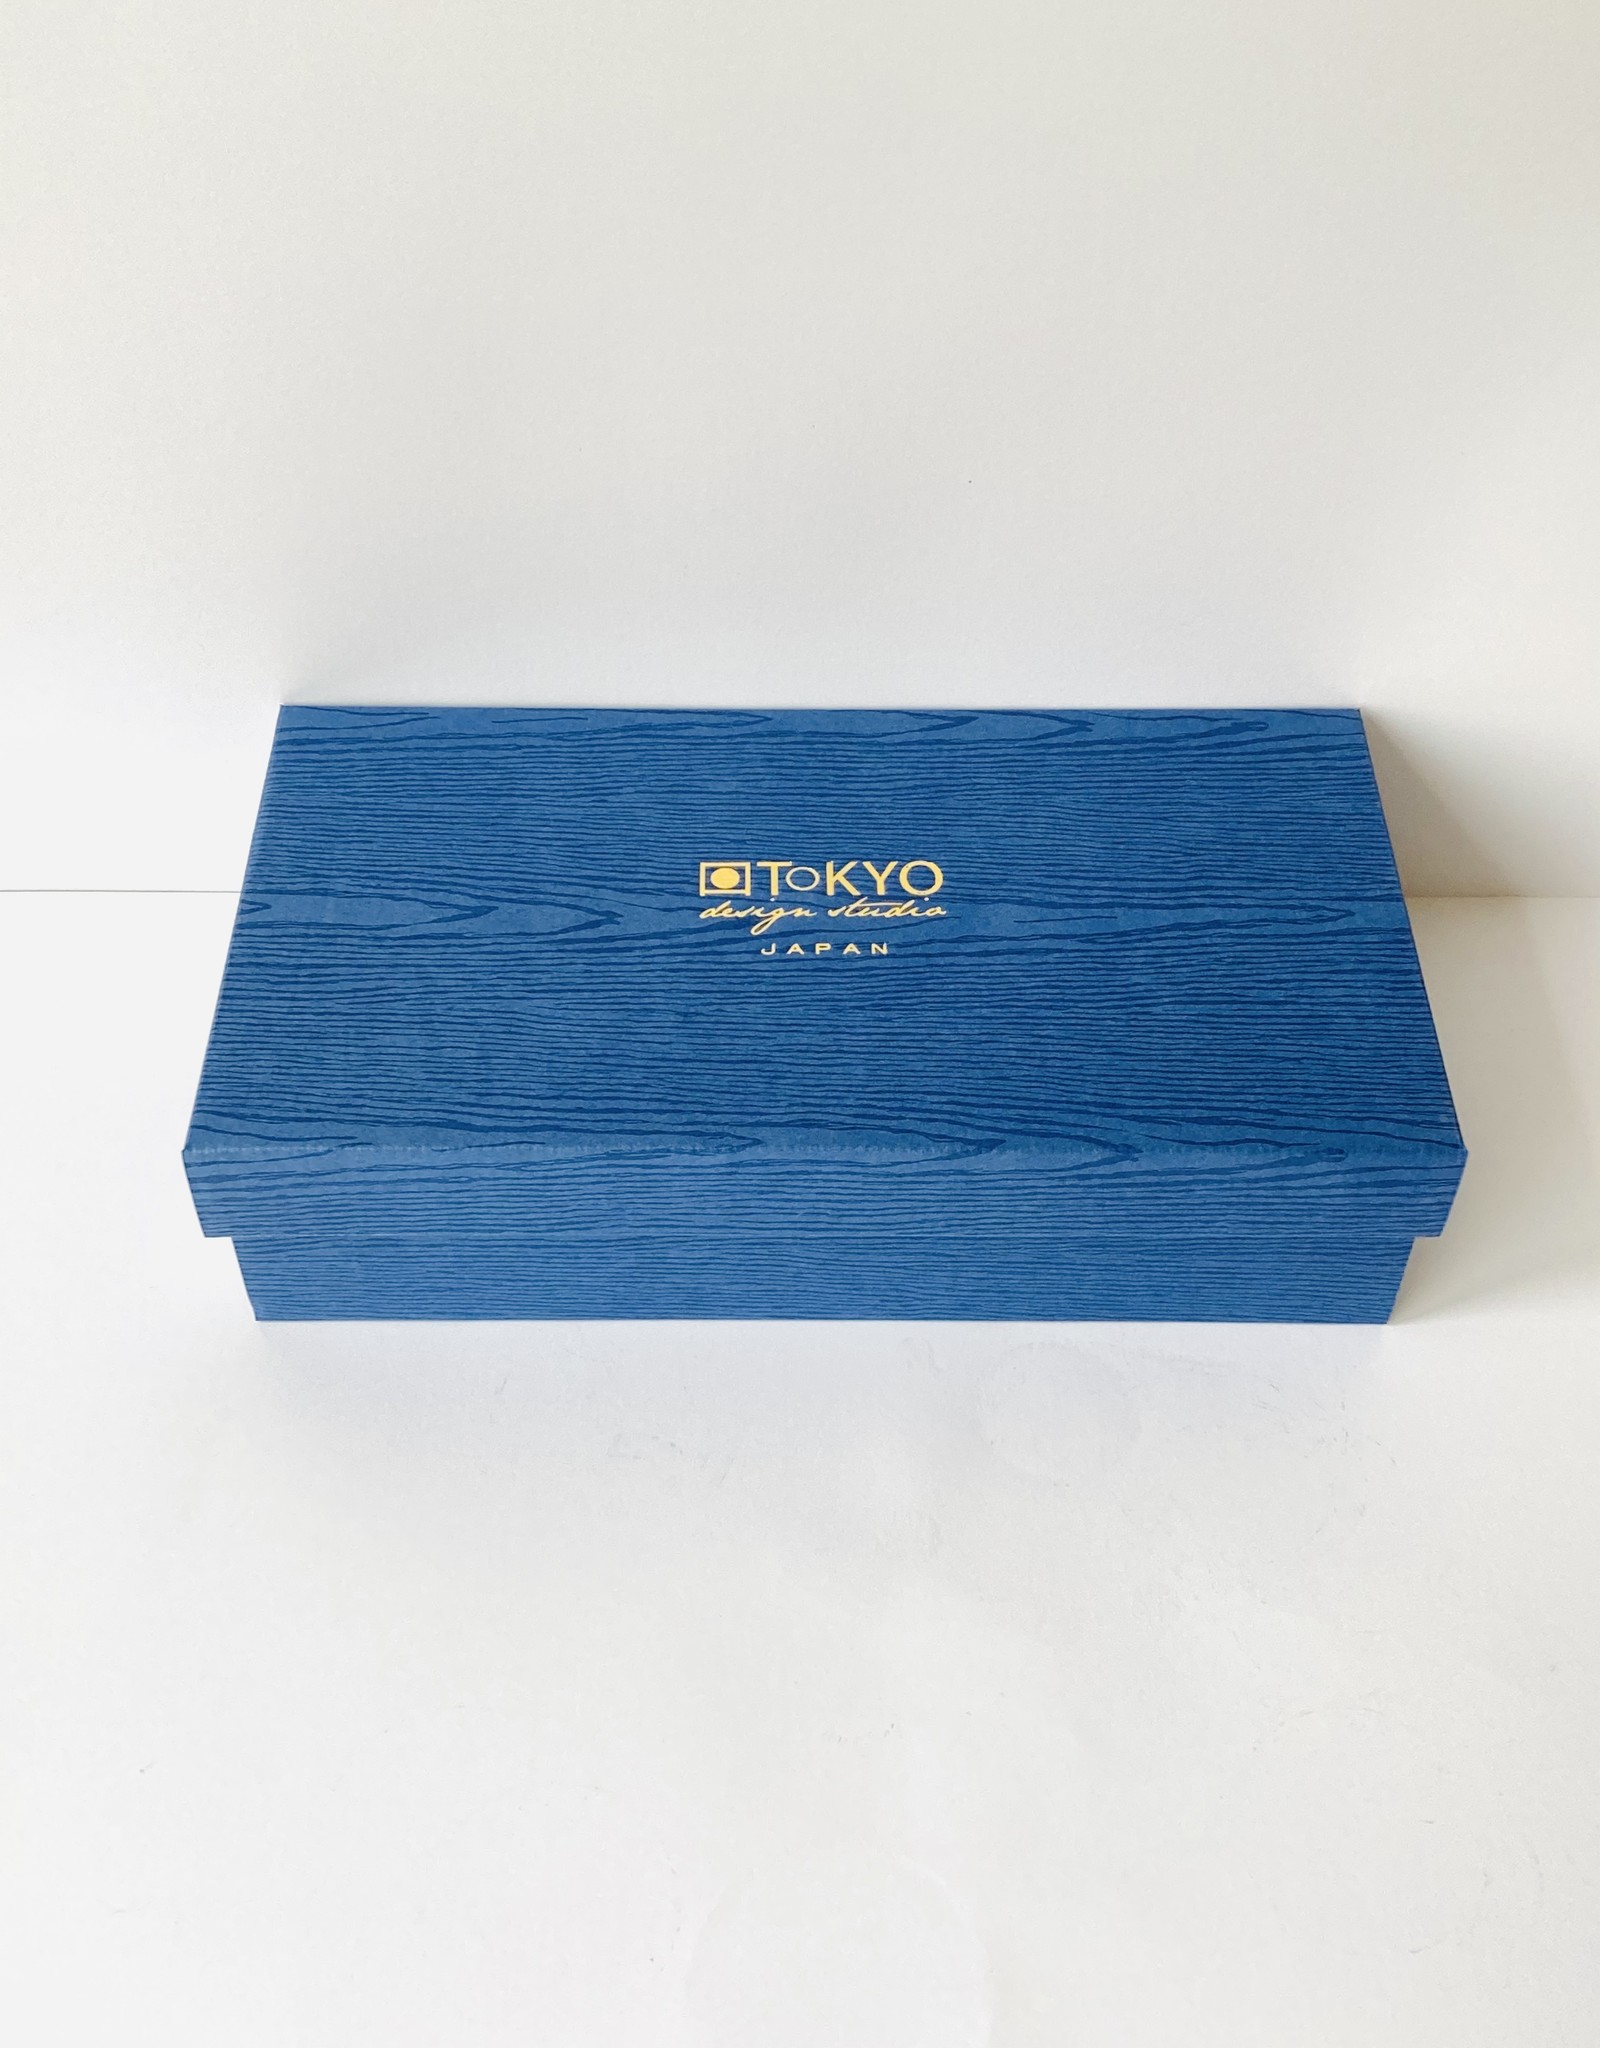 Tokyo Design Studio Nippon Blue bowls Star and Stripe gift set